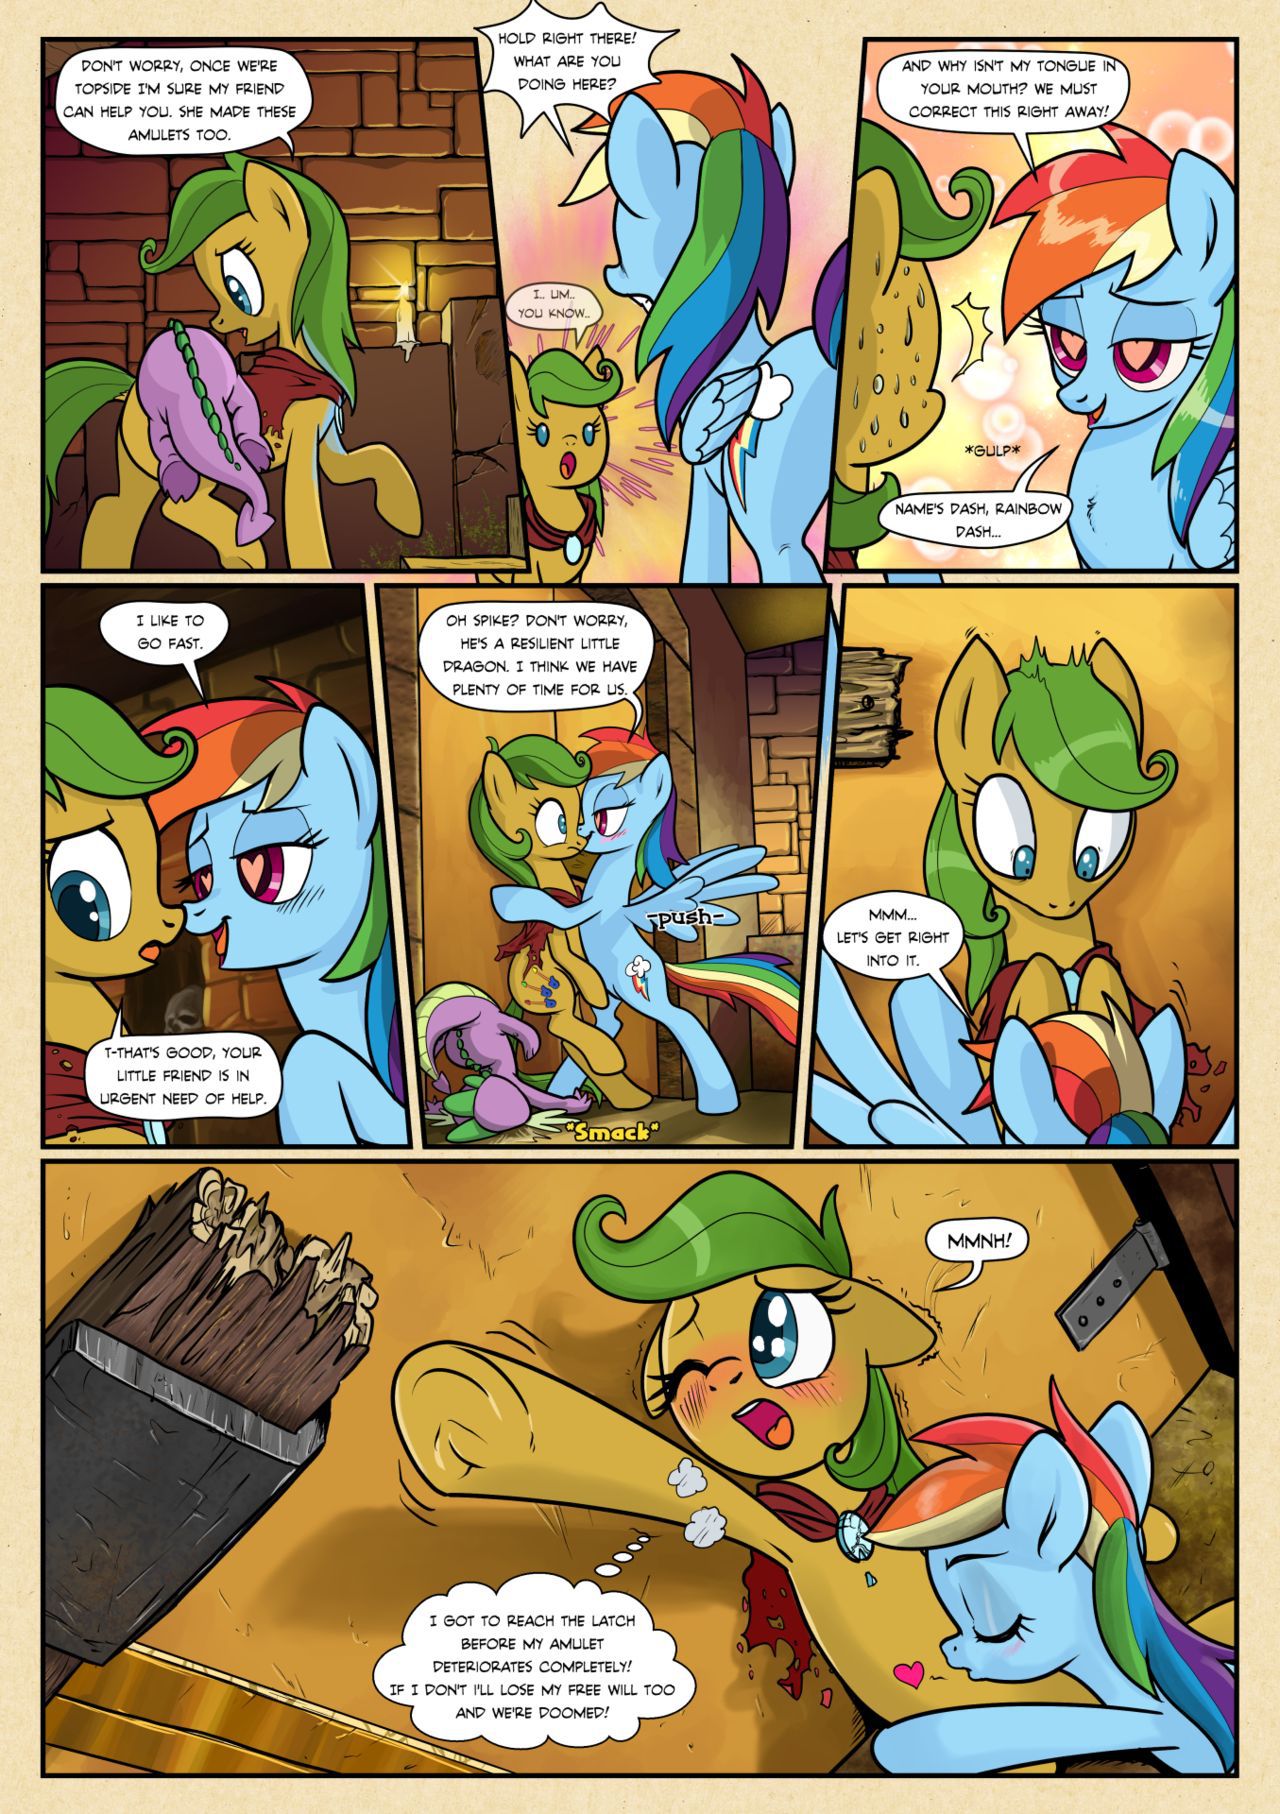 [Pencils] Anon's Pie Adventures (My Little Pony: Friendship is Magic) [In-Progress] 247